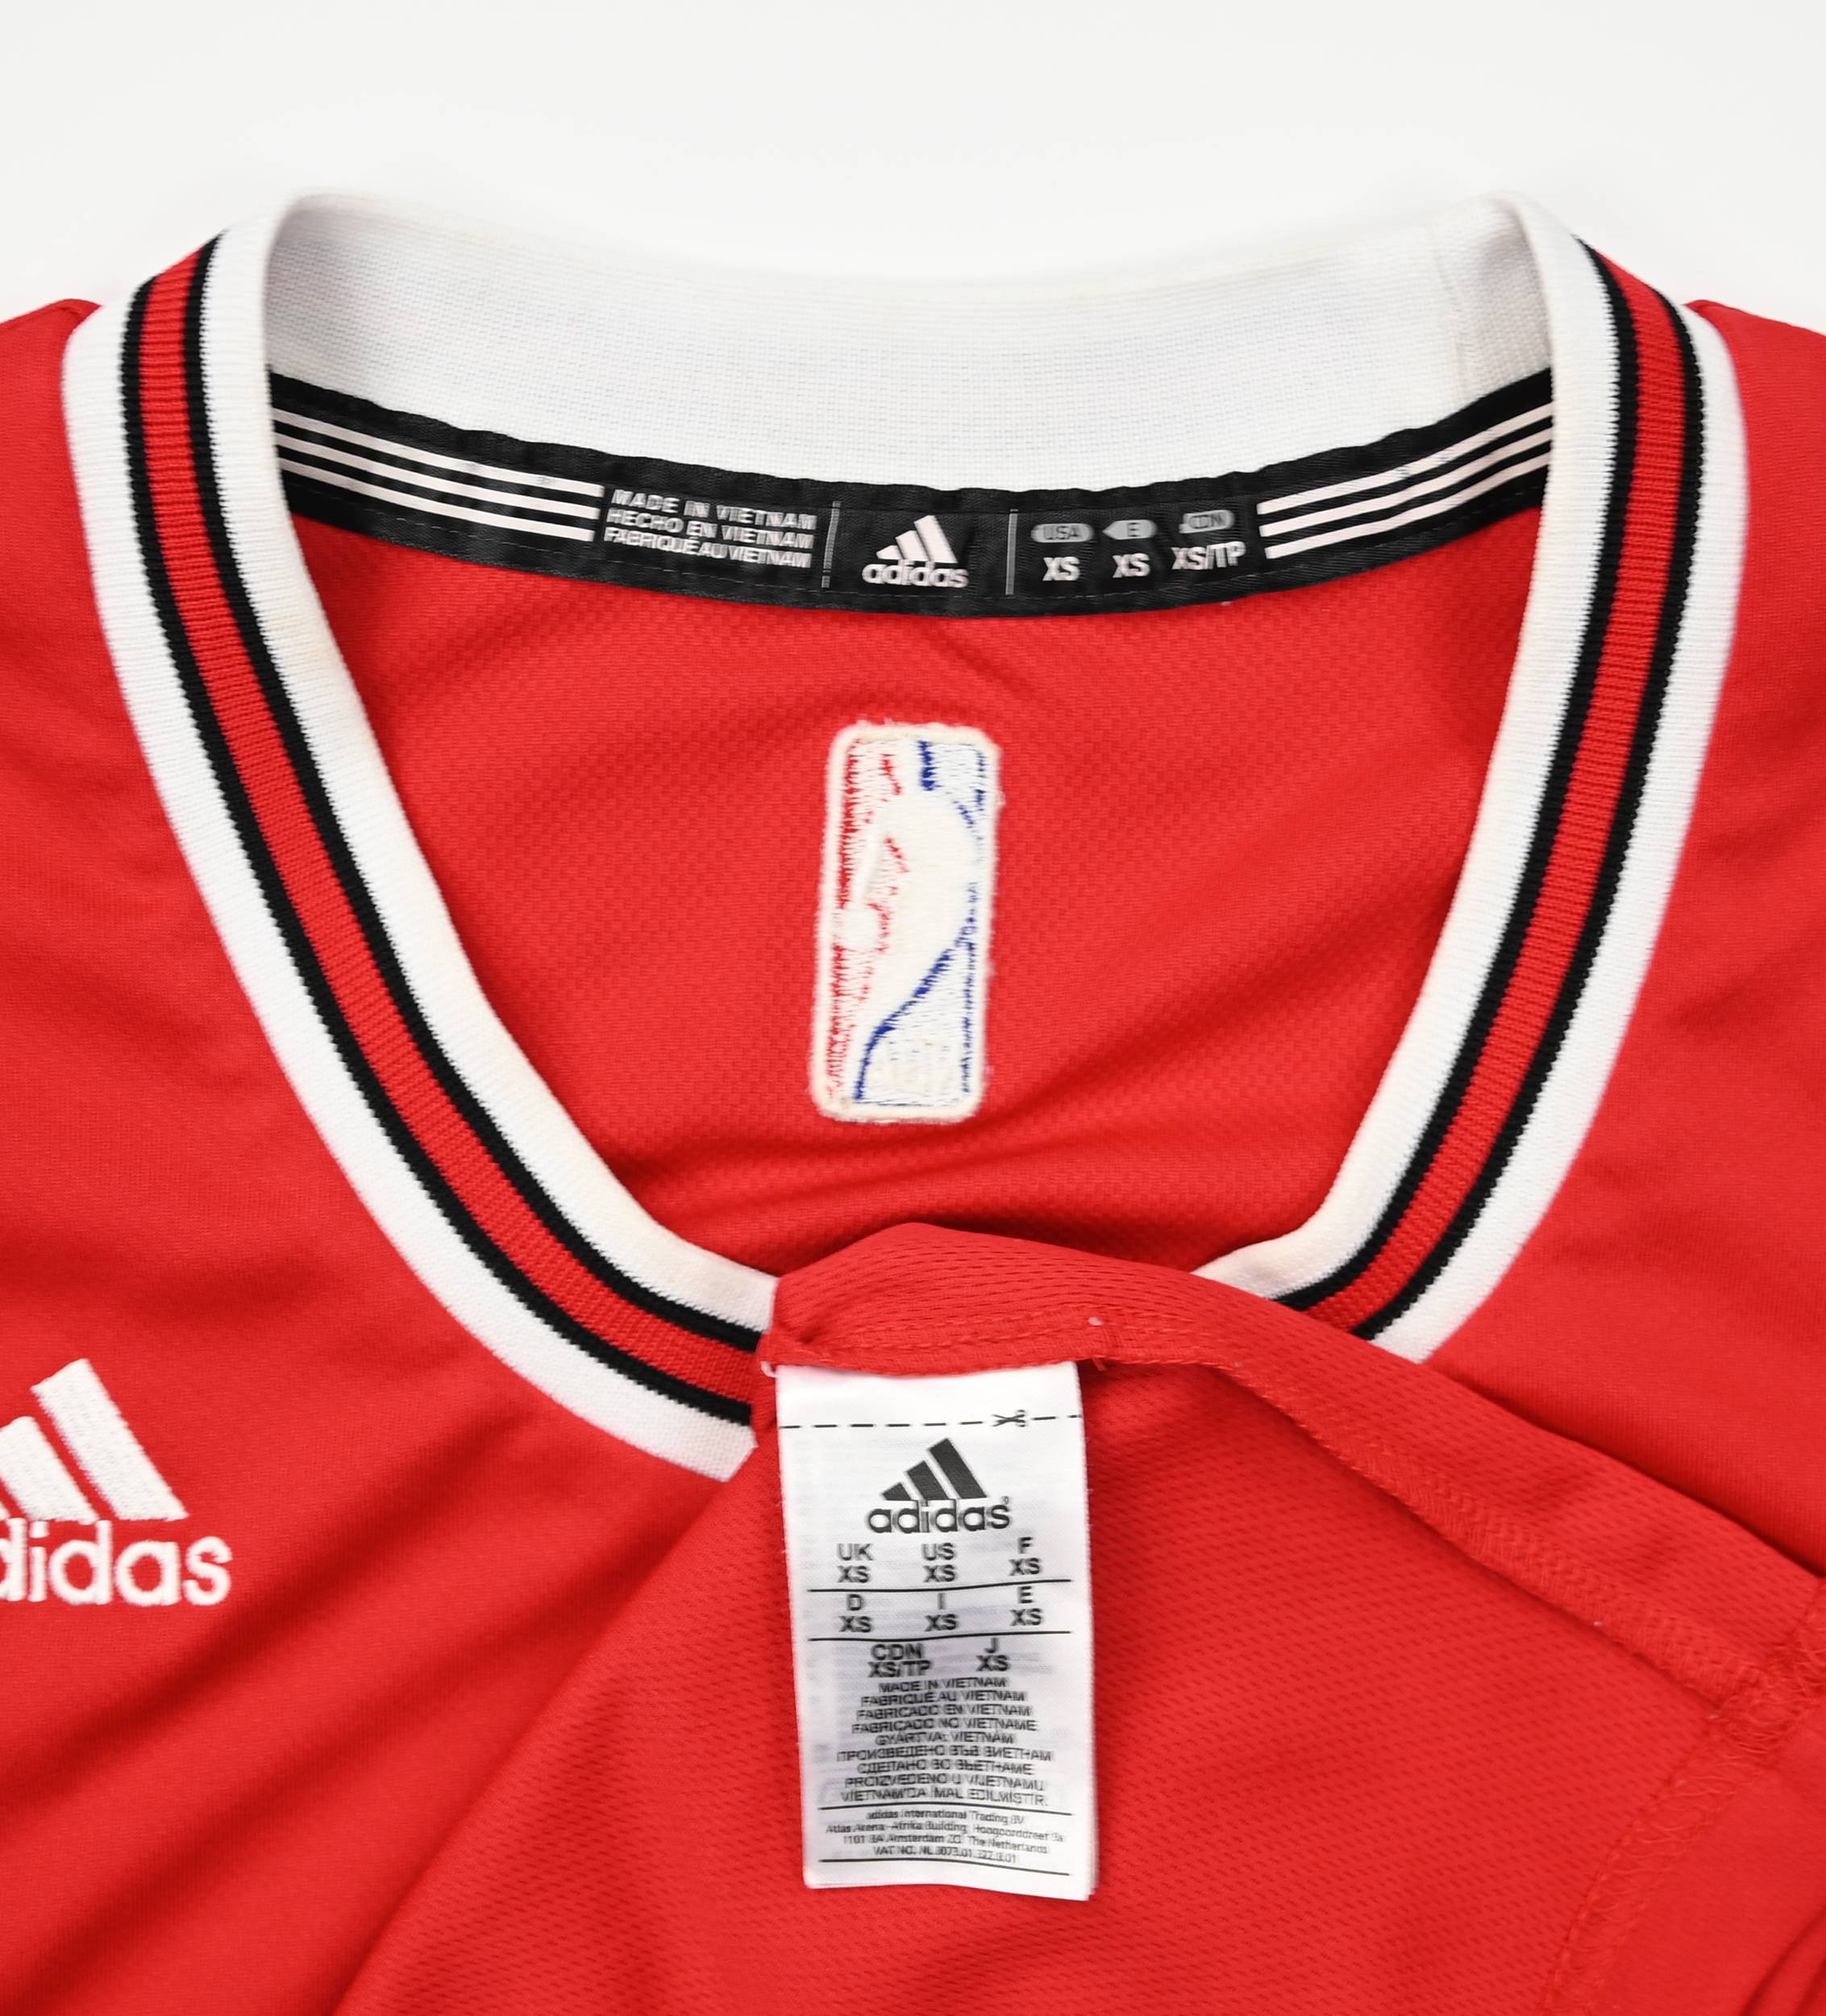 Adidas NBA Chicago Bulls Derrick Rose Basketball Jersey Mens Size XL White